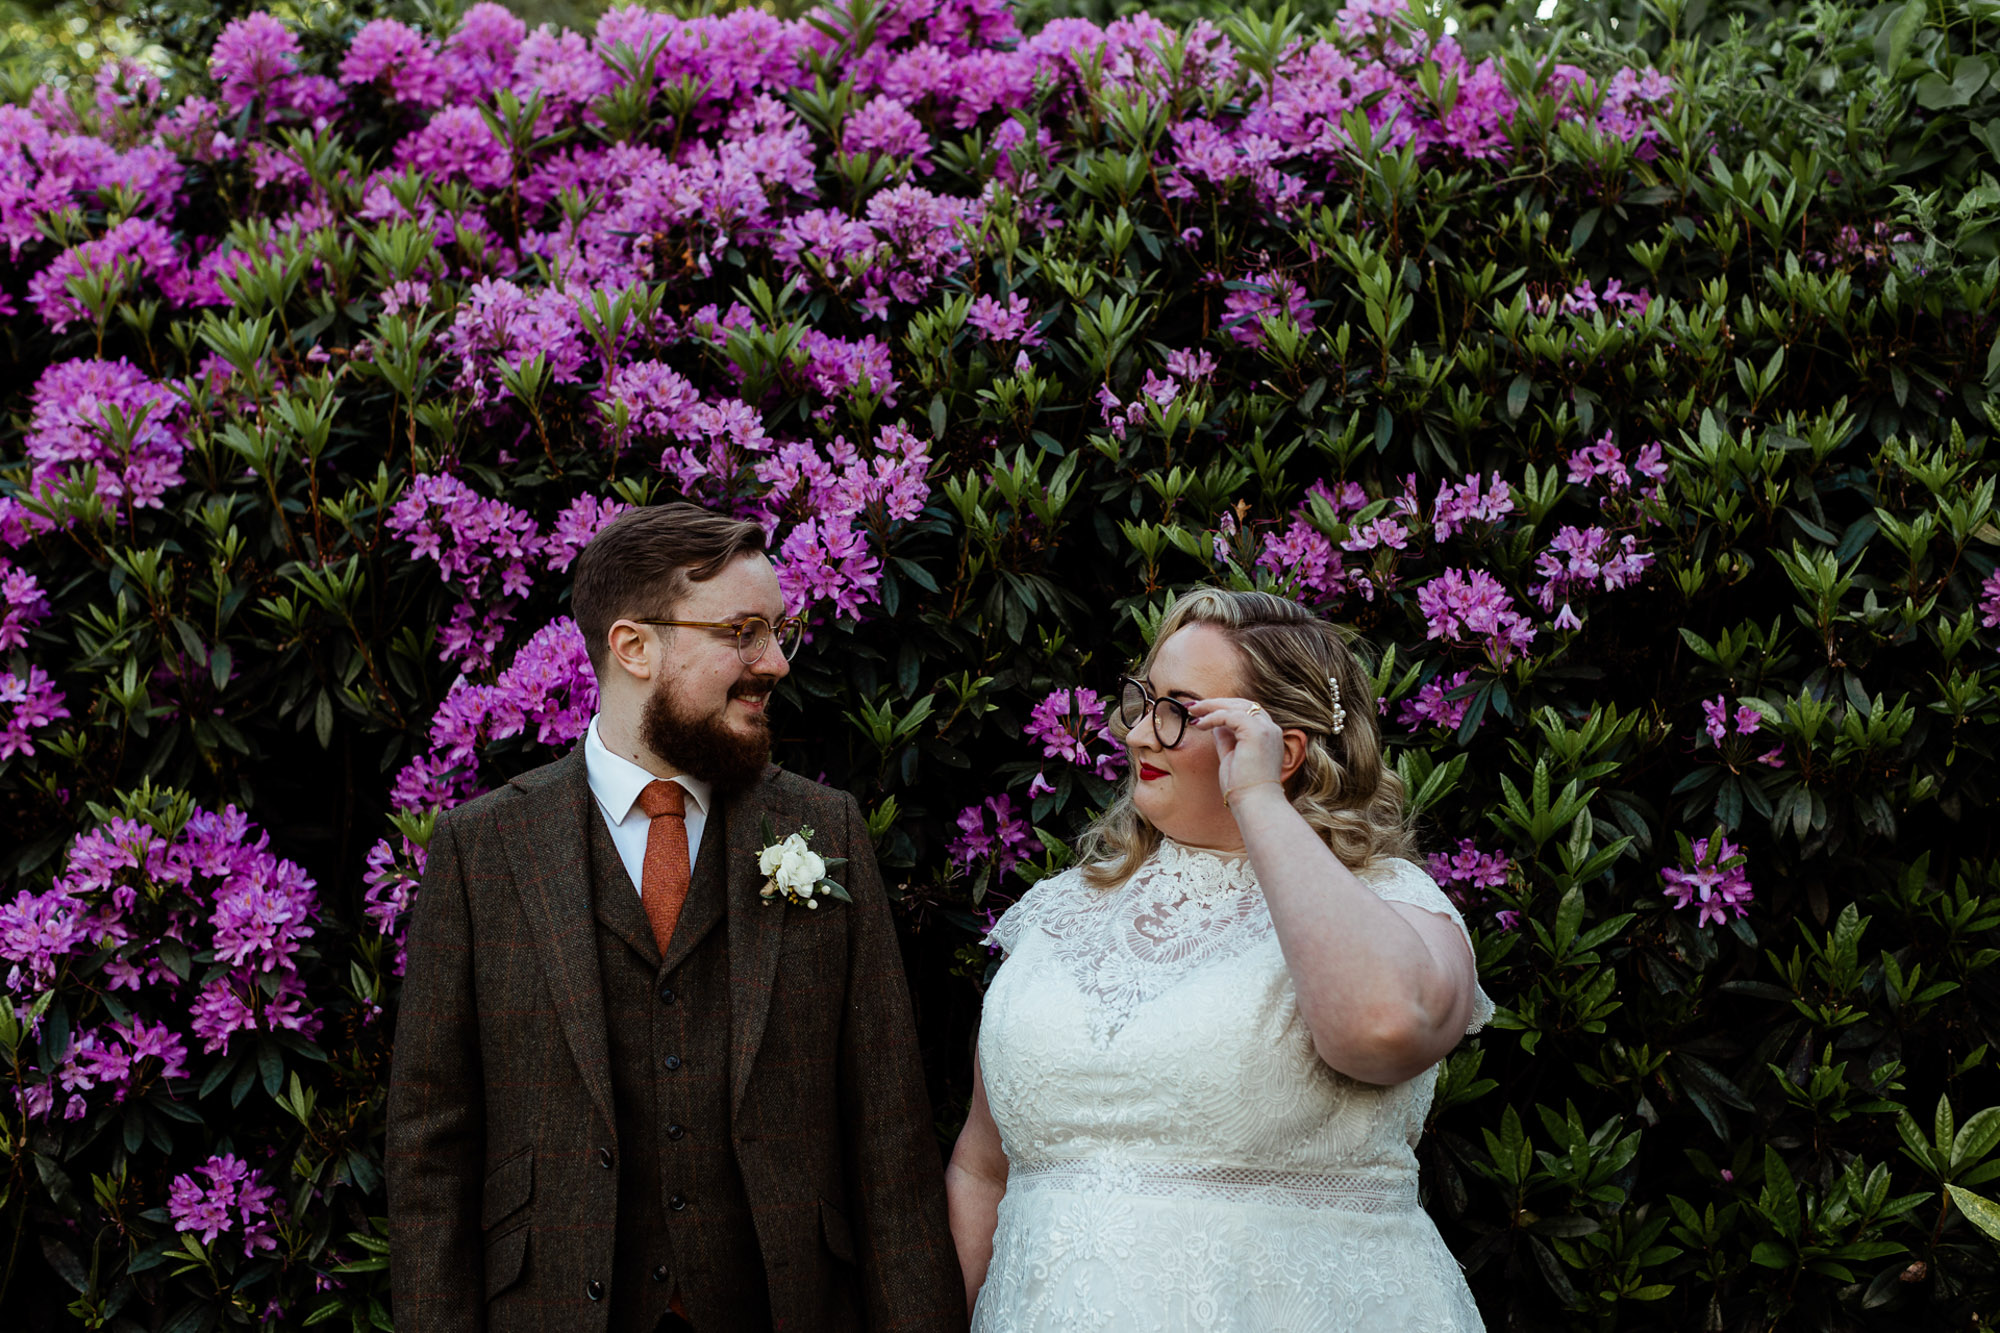 Struve Photography - Natural, fun Scottish wedding Photography